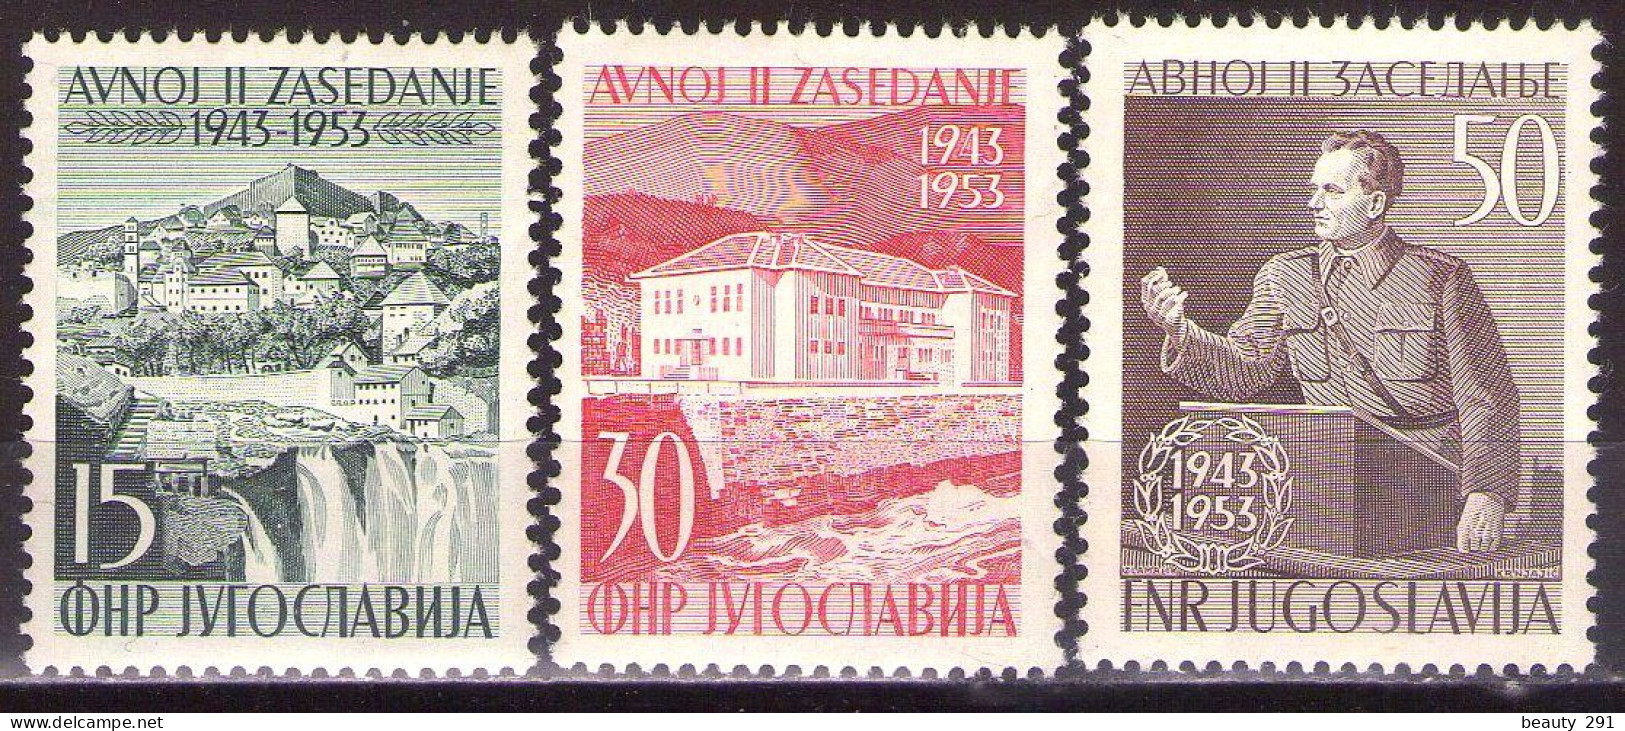 Yugoslavia 1953 -1st Republican Legislative Assembly AVNOJ II  - Mi 735-737 - MNH**VF - Ungebraucht